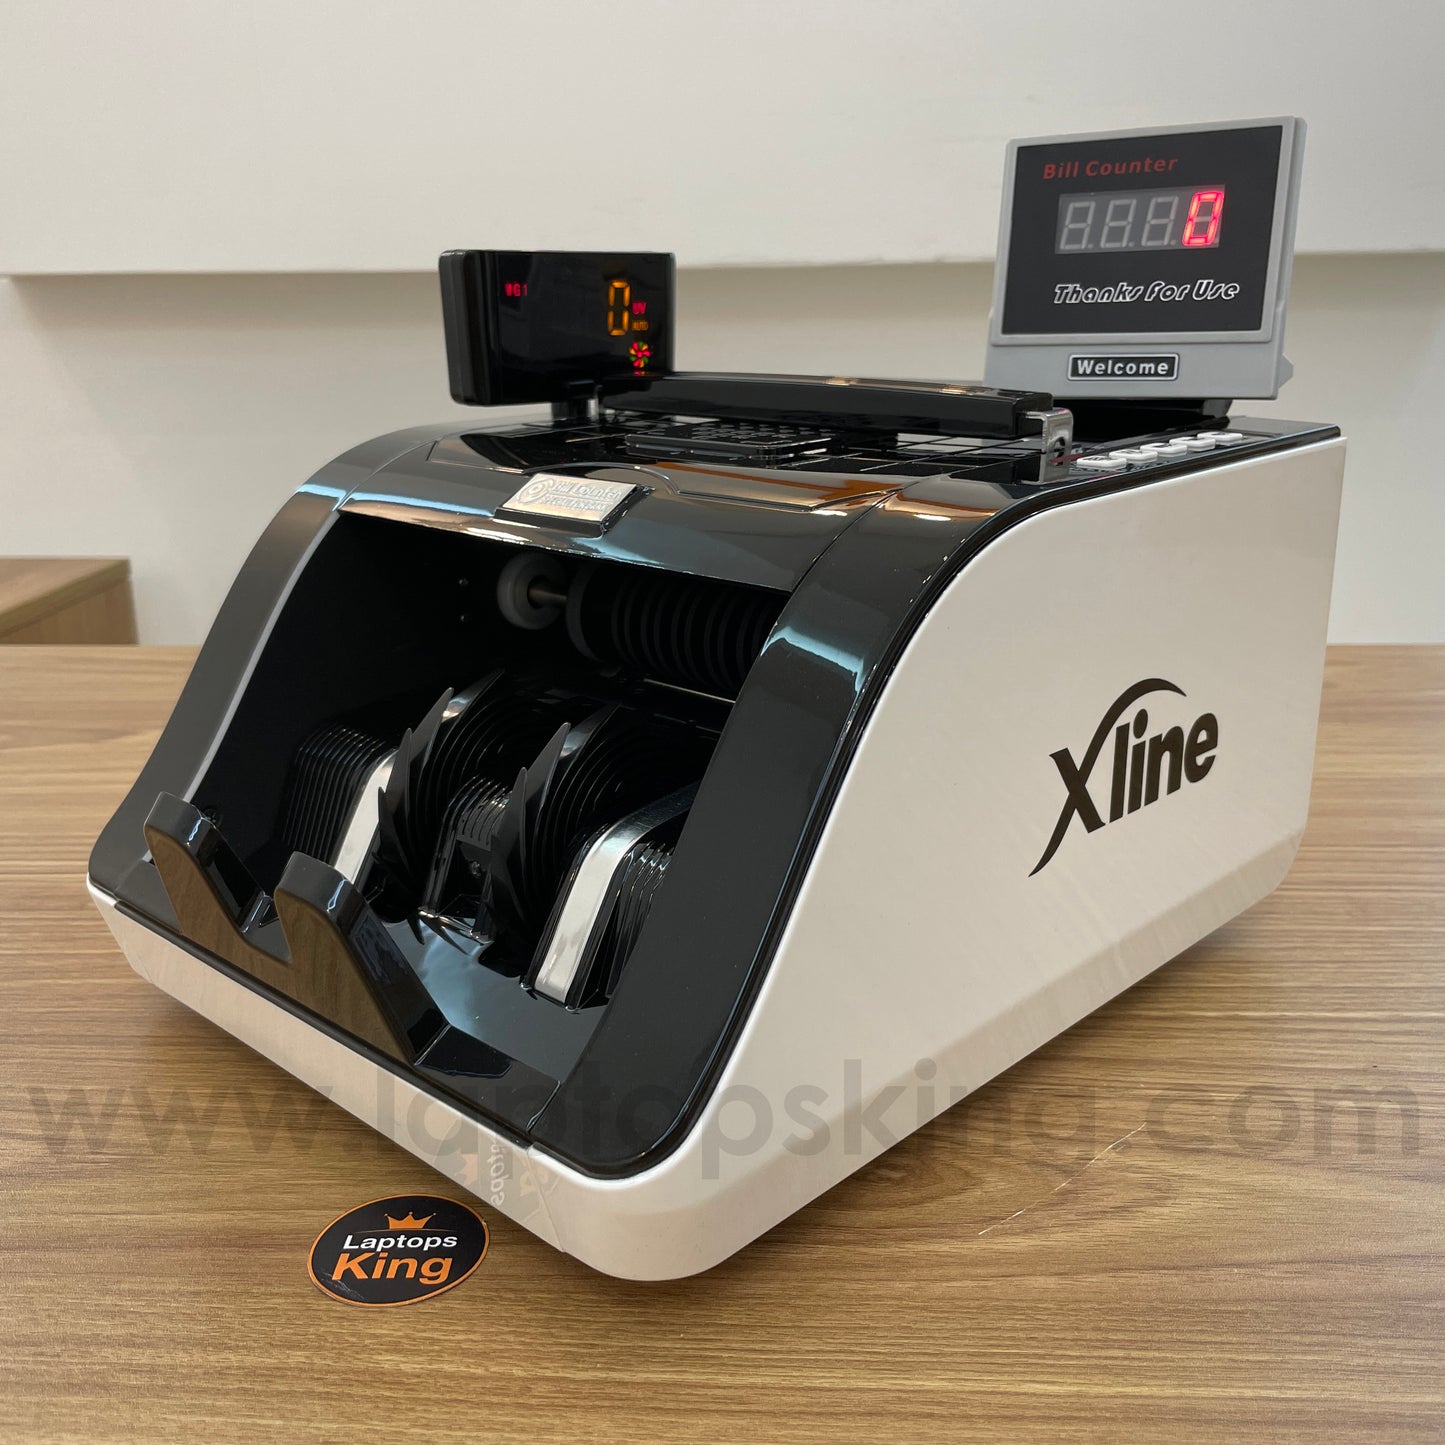 Xline XGFC110 UV/MG Money Counter (New)